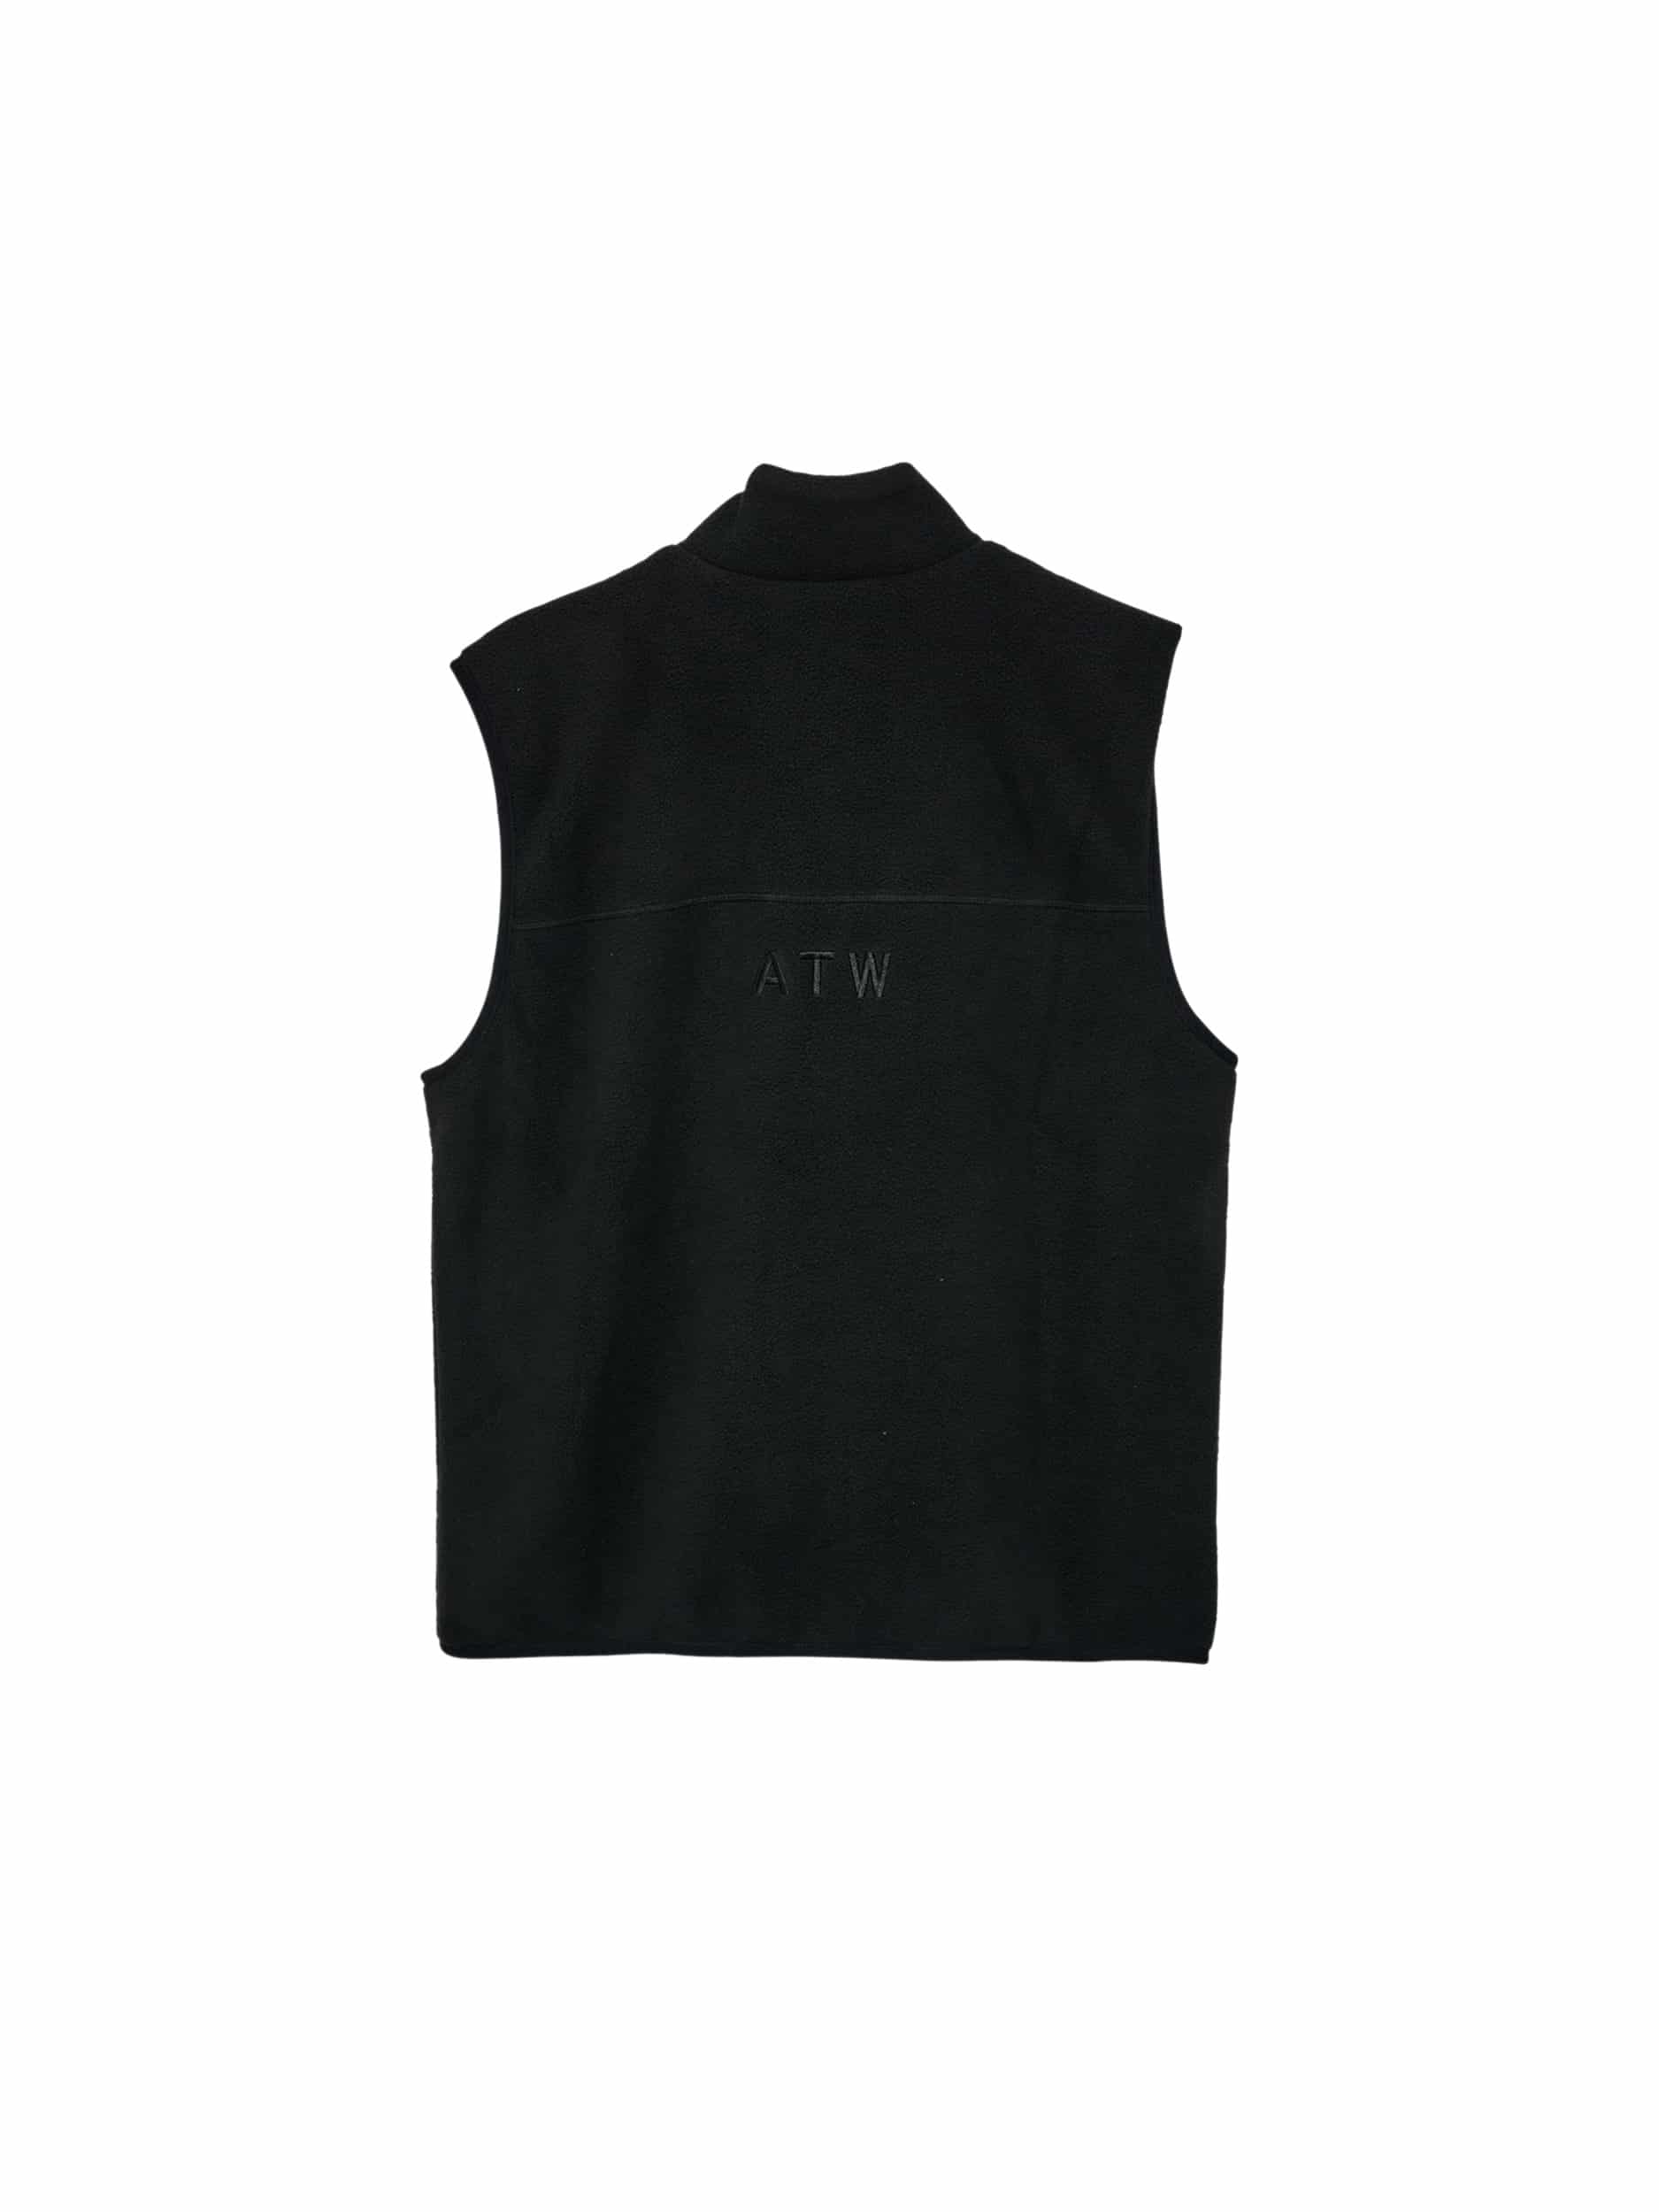 HALO Teddy Fleece Vest - Black Back